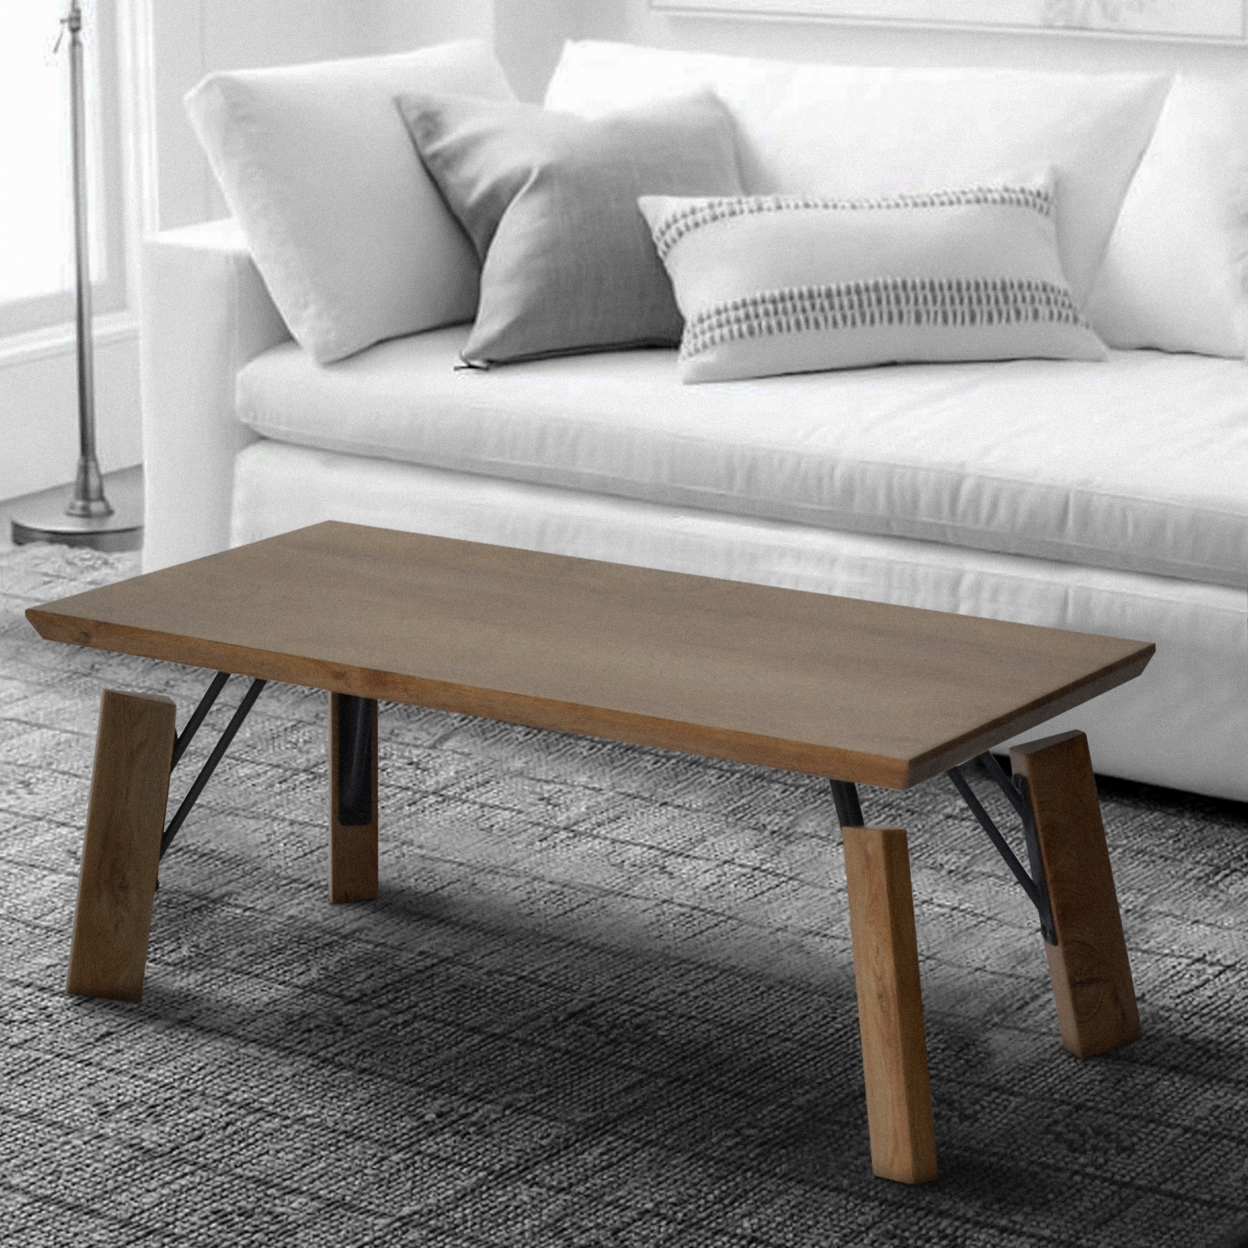 Rectangular Wooden Coffee Table With Block Legs, Natural Brown- Saltoro Sherpi